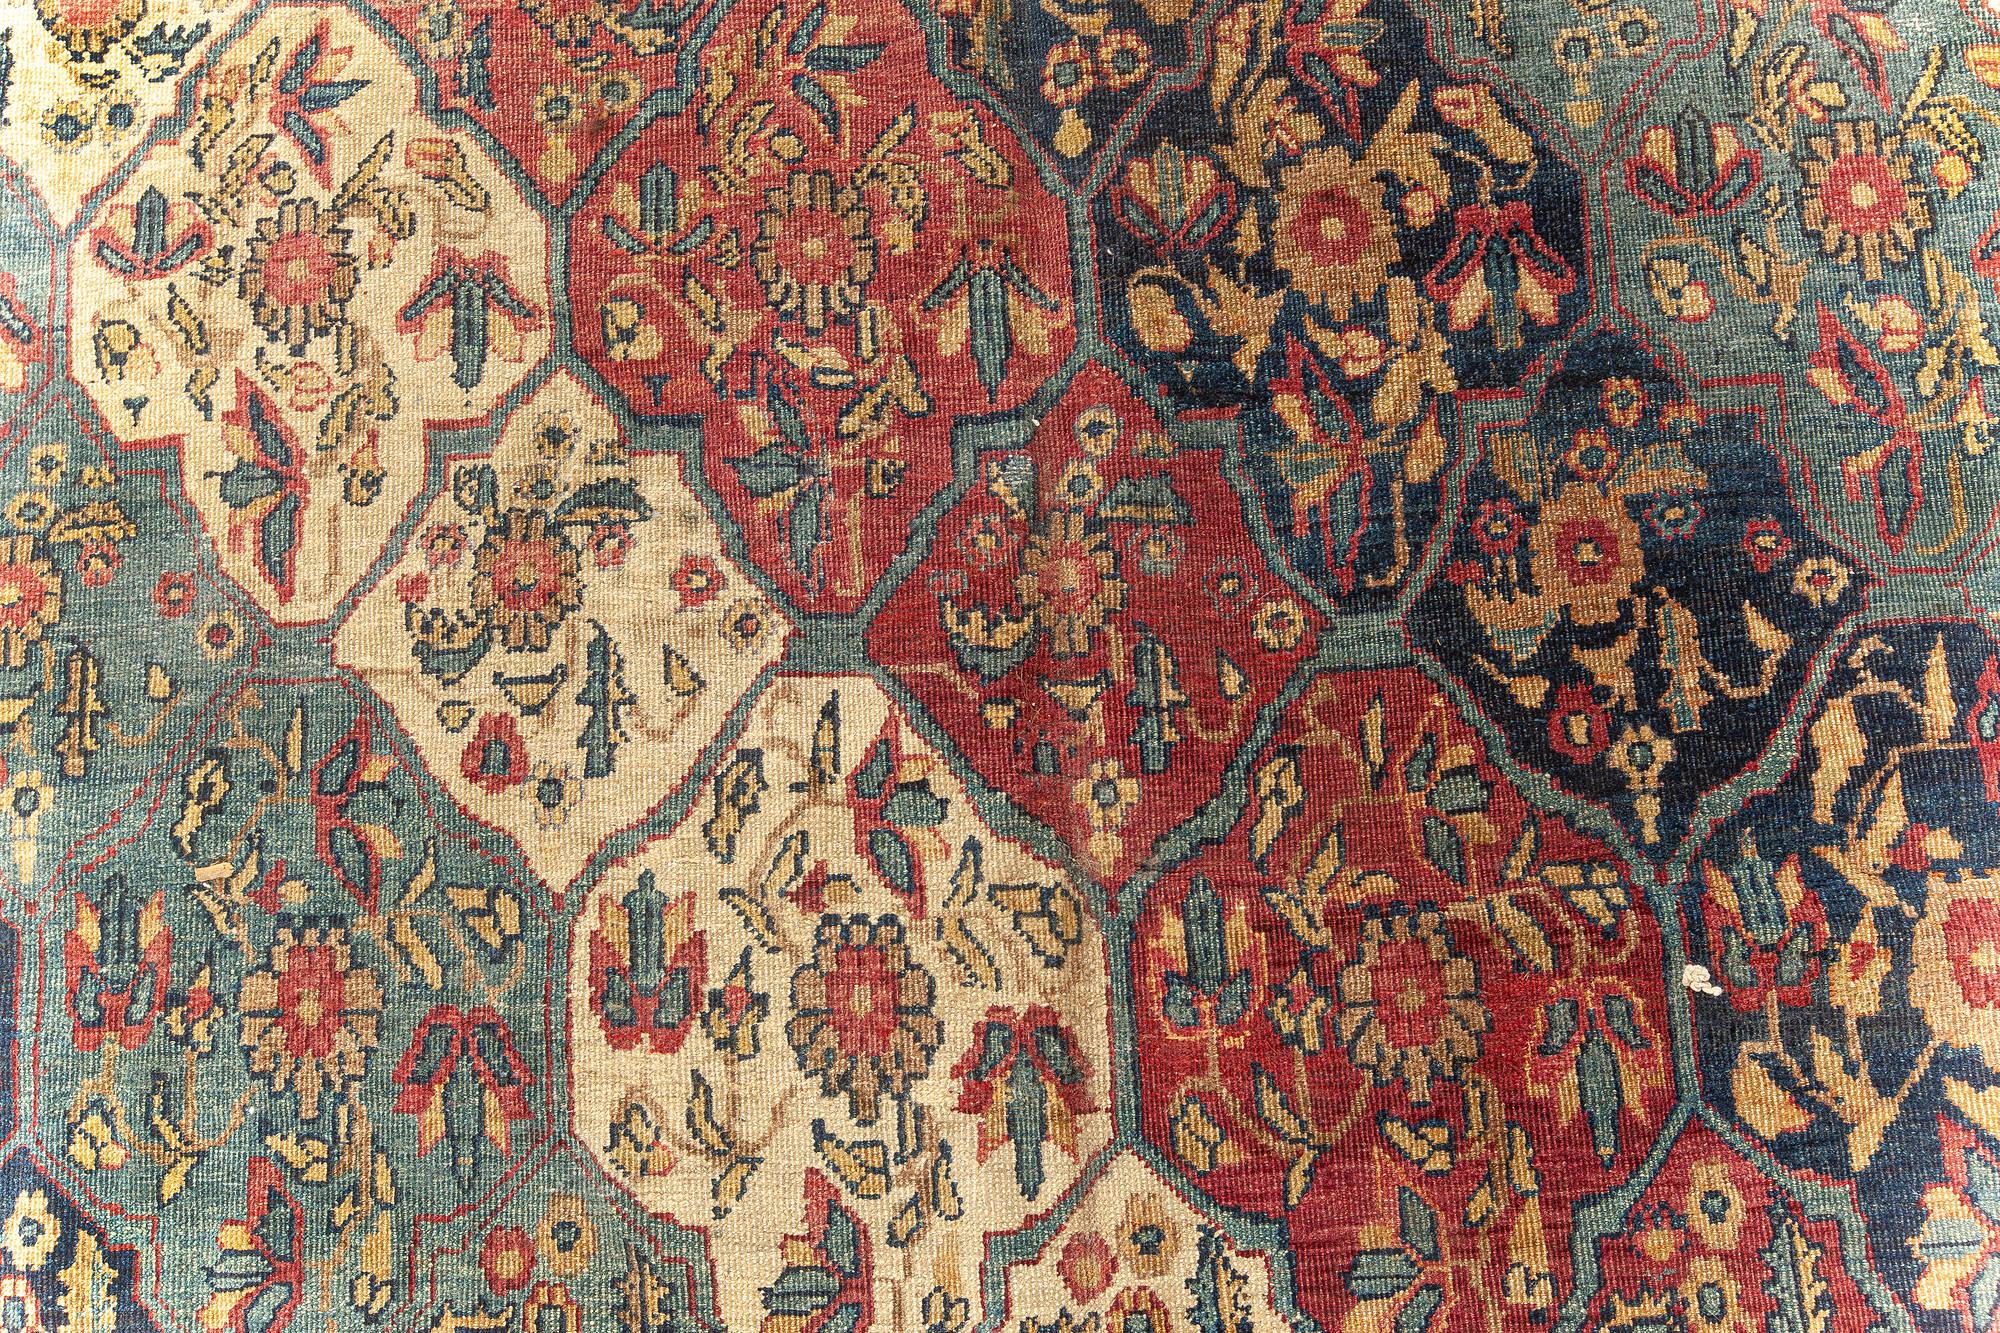 19th century Kirman bold red, dark and light blue handwoven wool rug
Size: 6'6